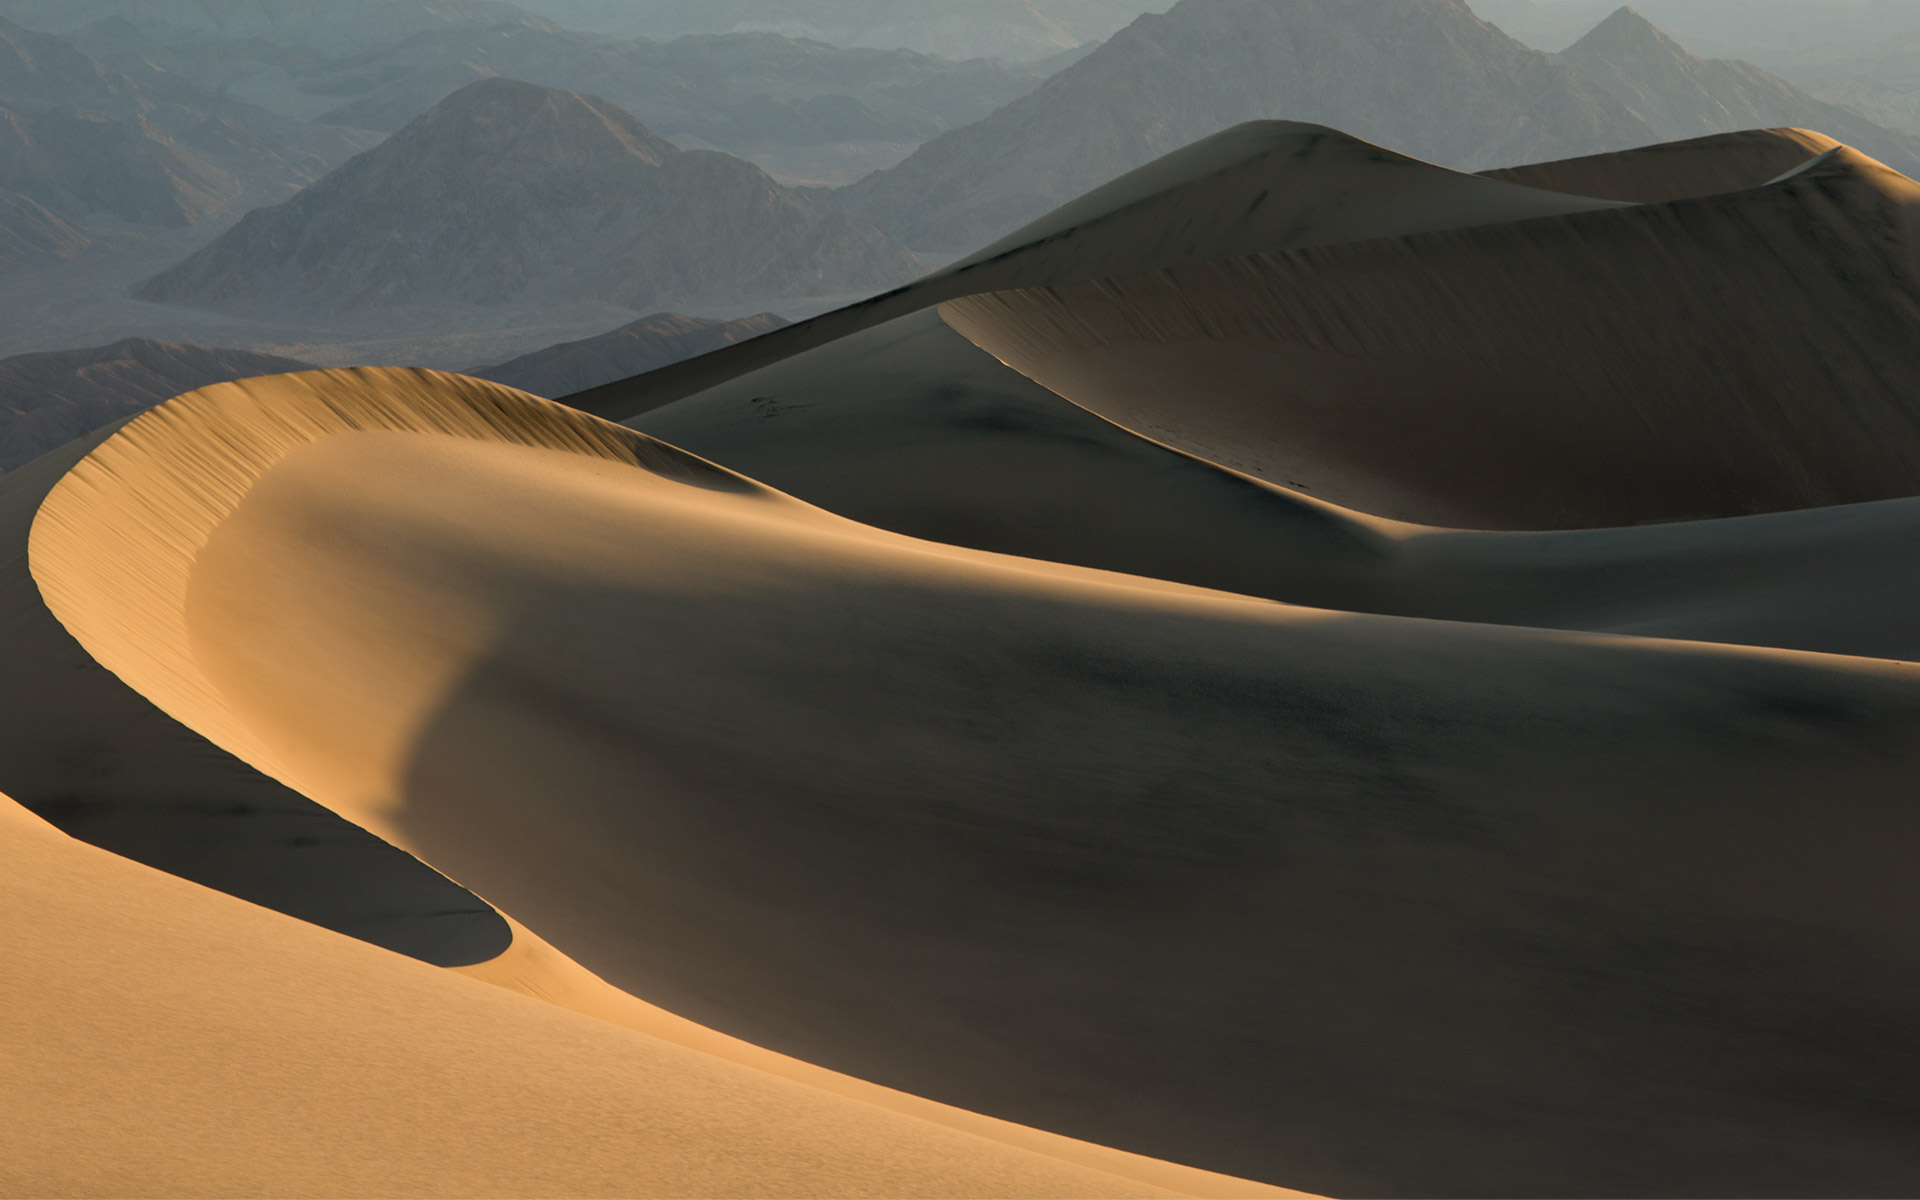 Mesquite Flat Sand Dunes, Death Valley